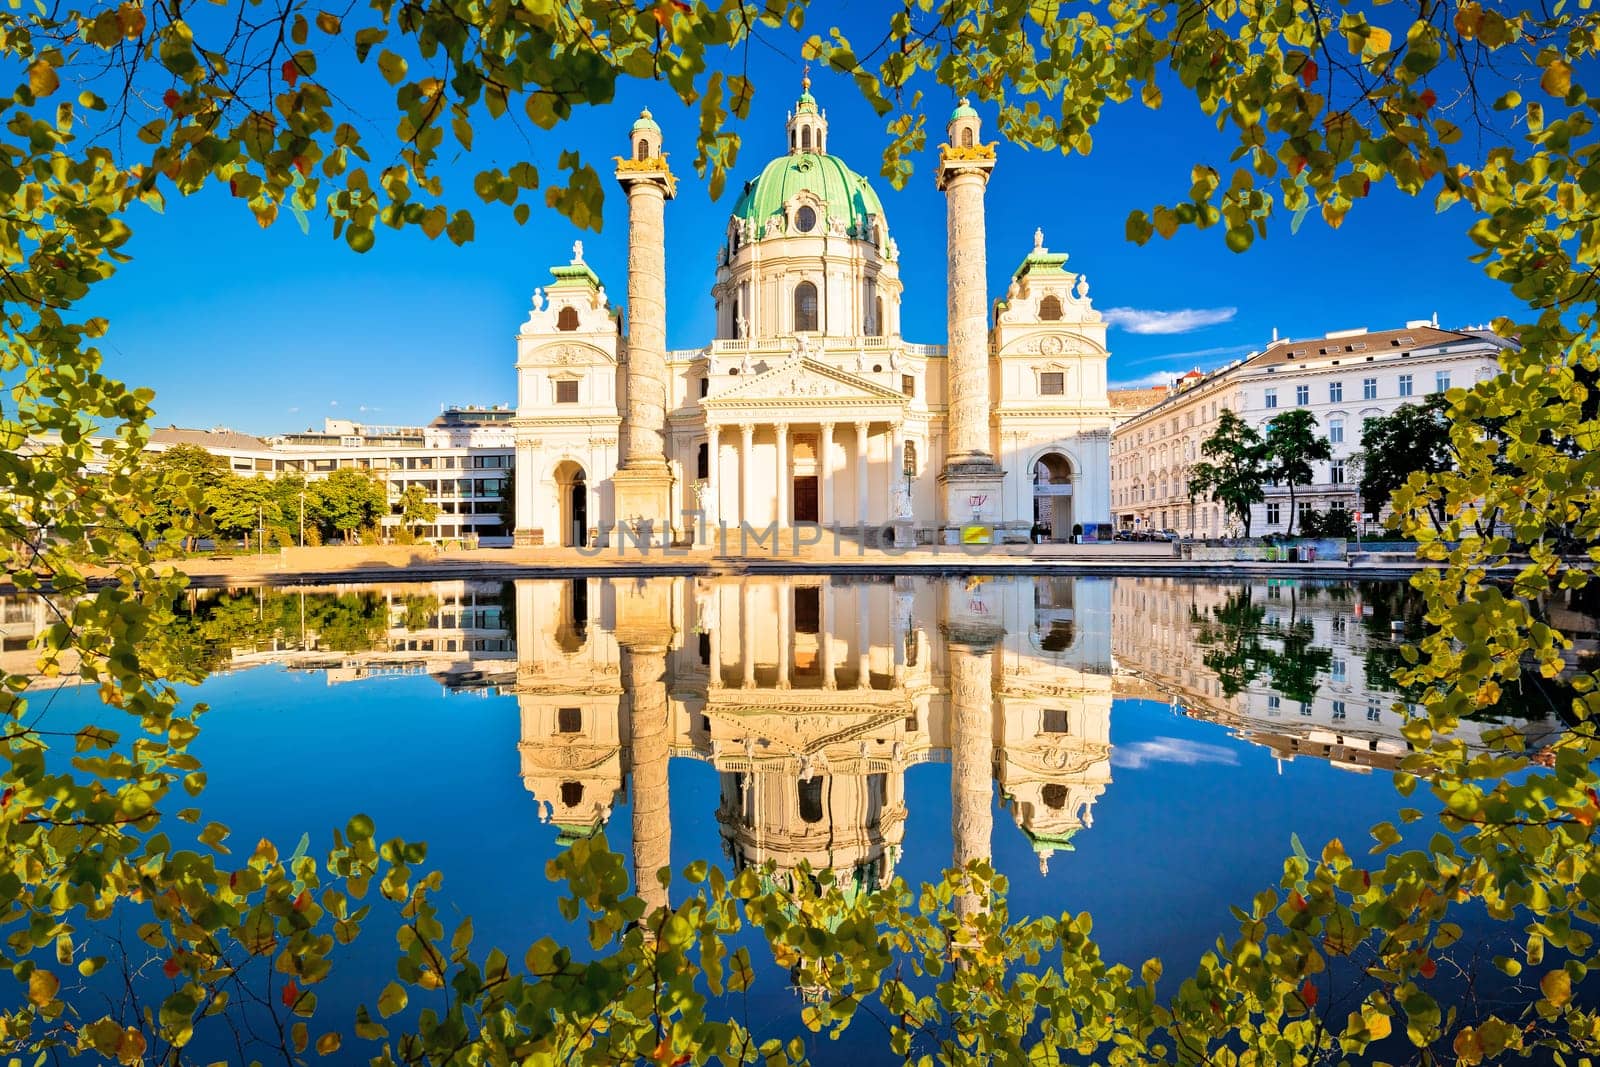 Karlskirche church of Vienna reflection view by xbrchx